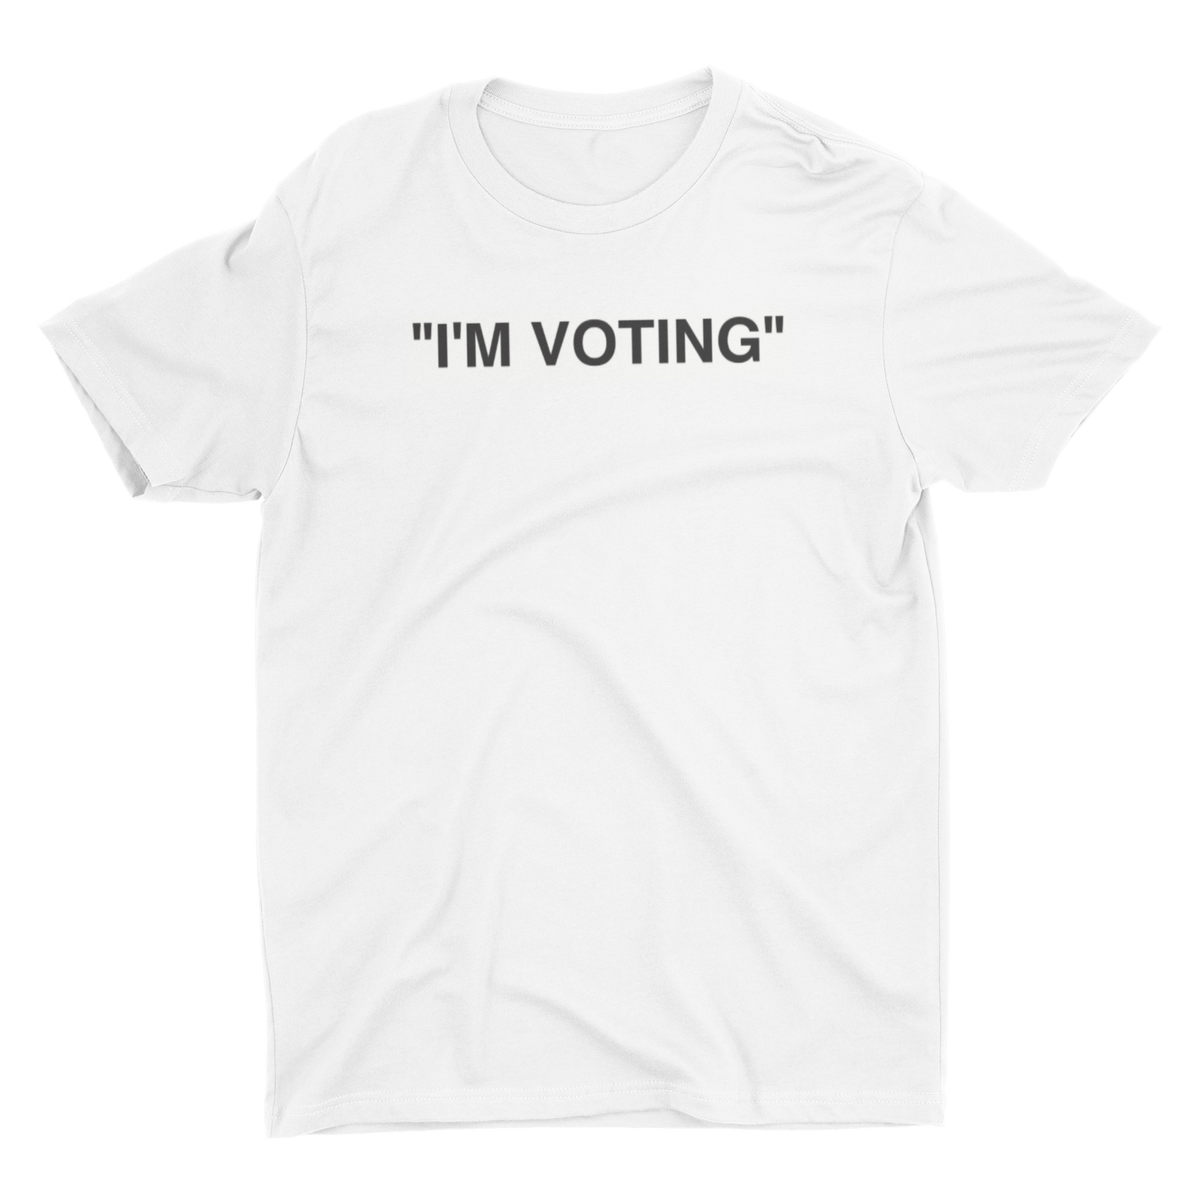 "I’M VOTING" - LAST CHANCE